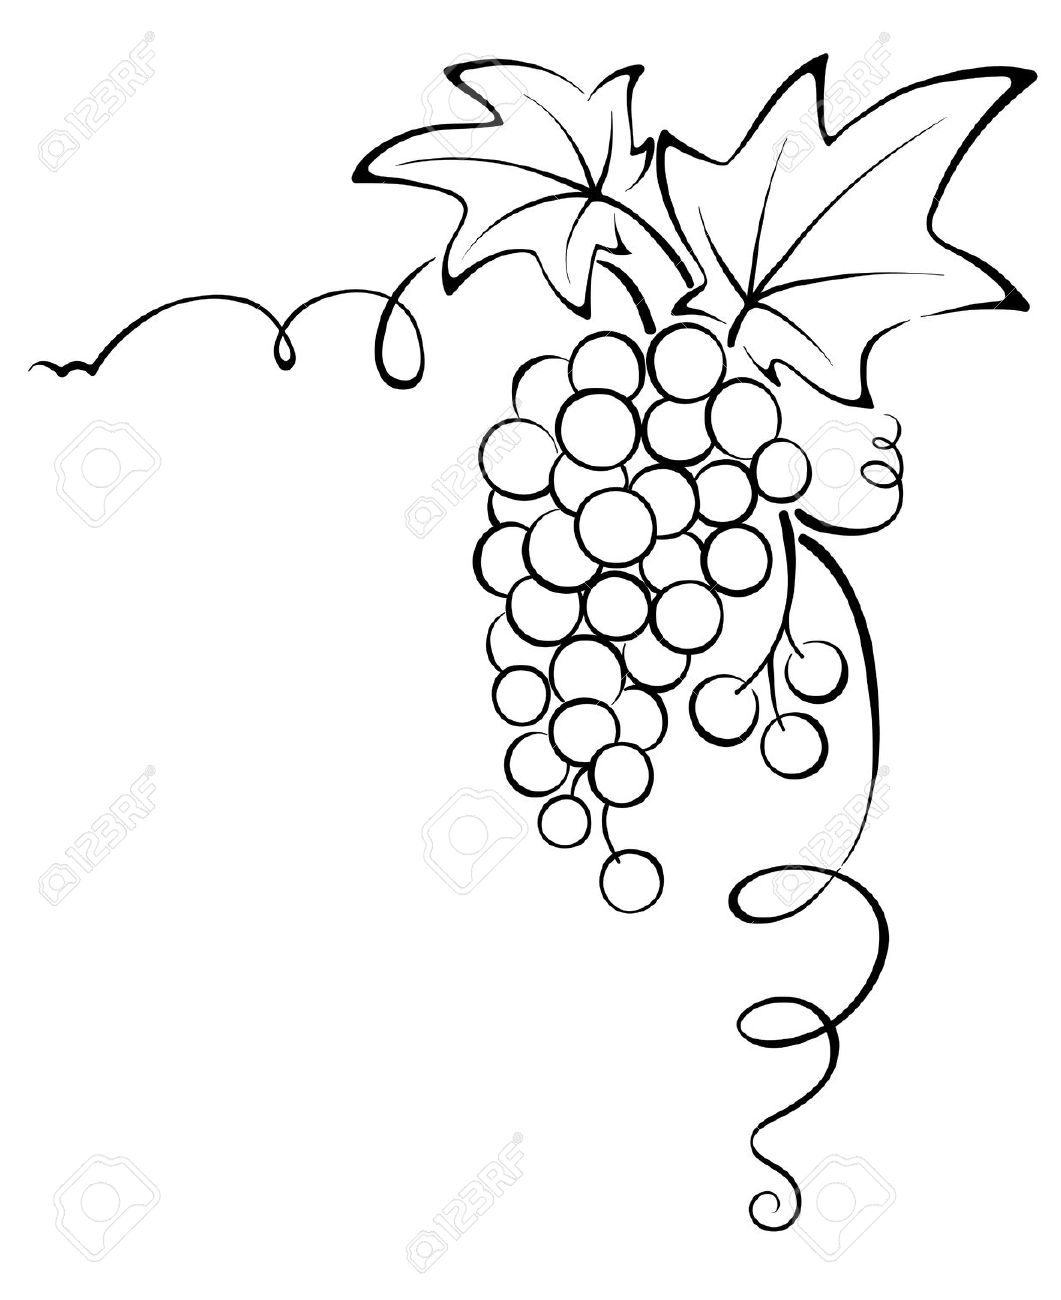 Grape Vine Drawing at GetDrawings | Free download